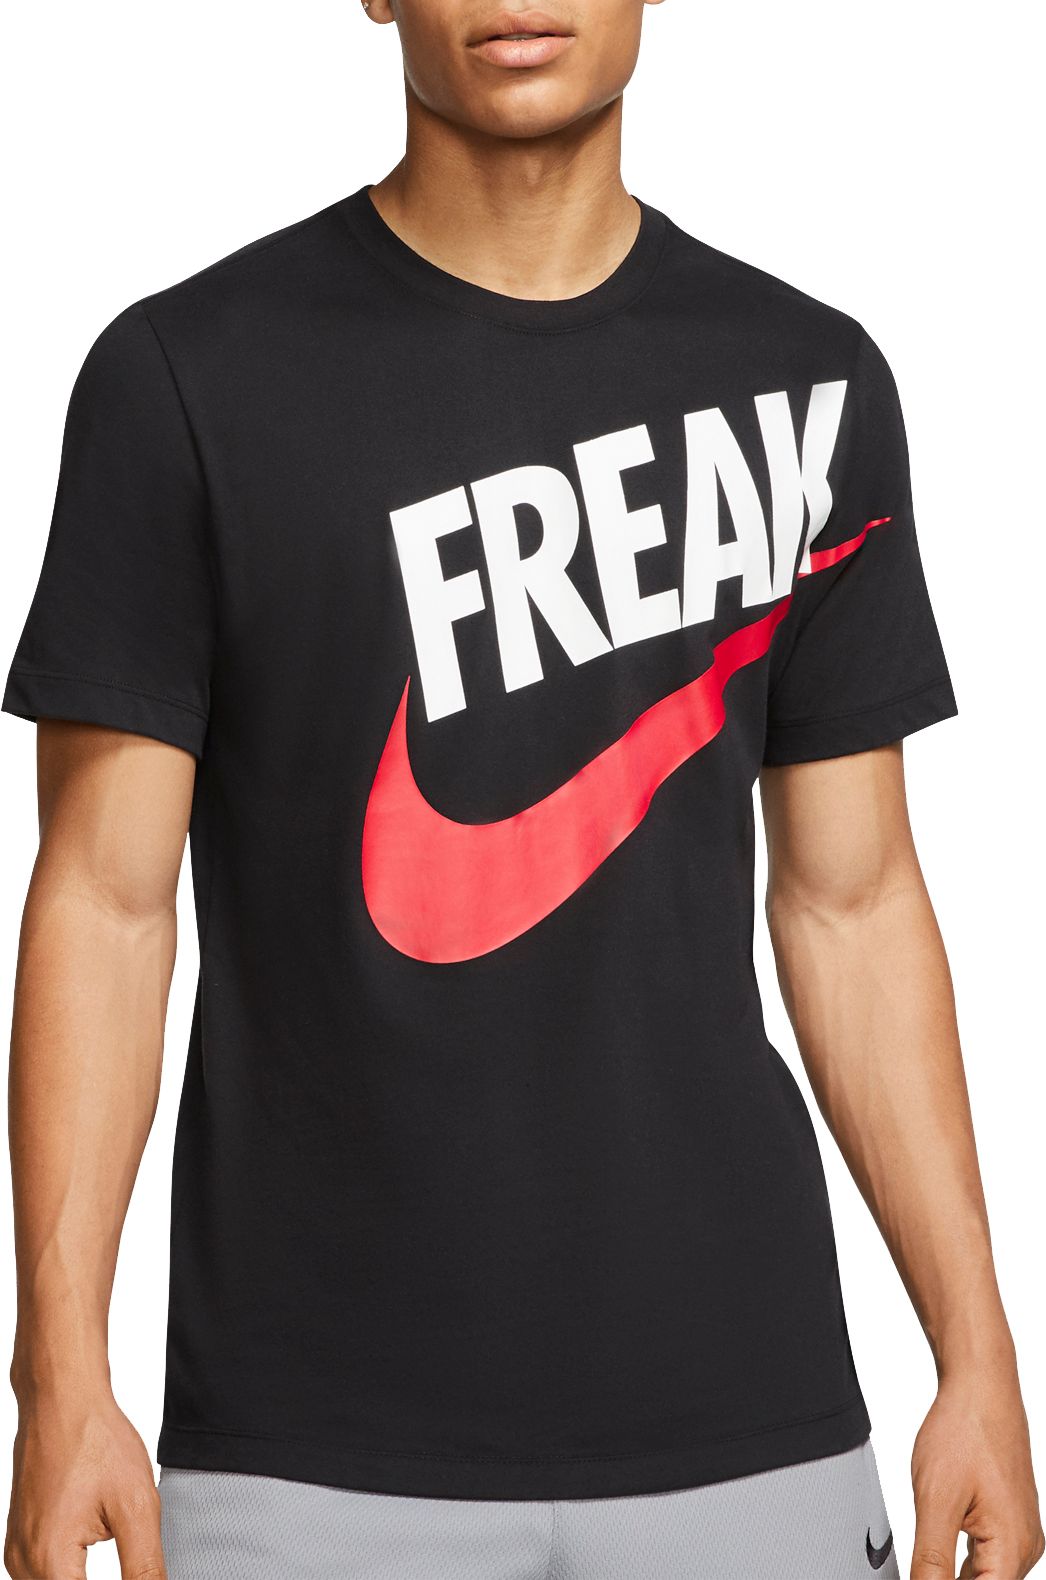 greek freak shirt nike